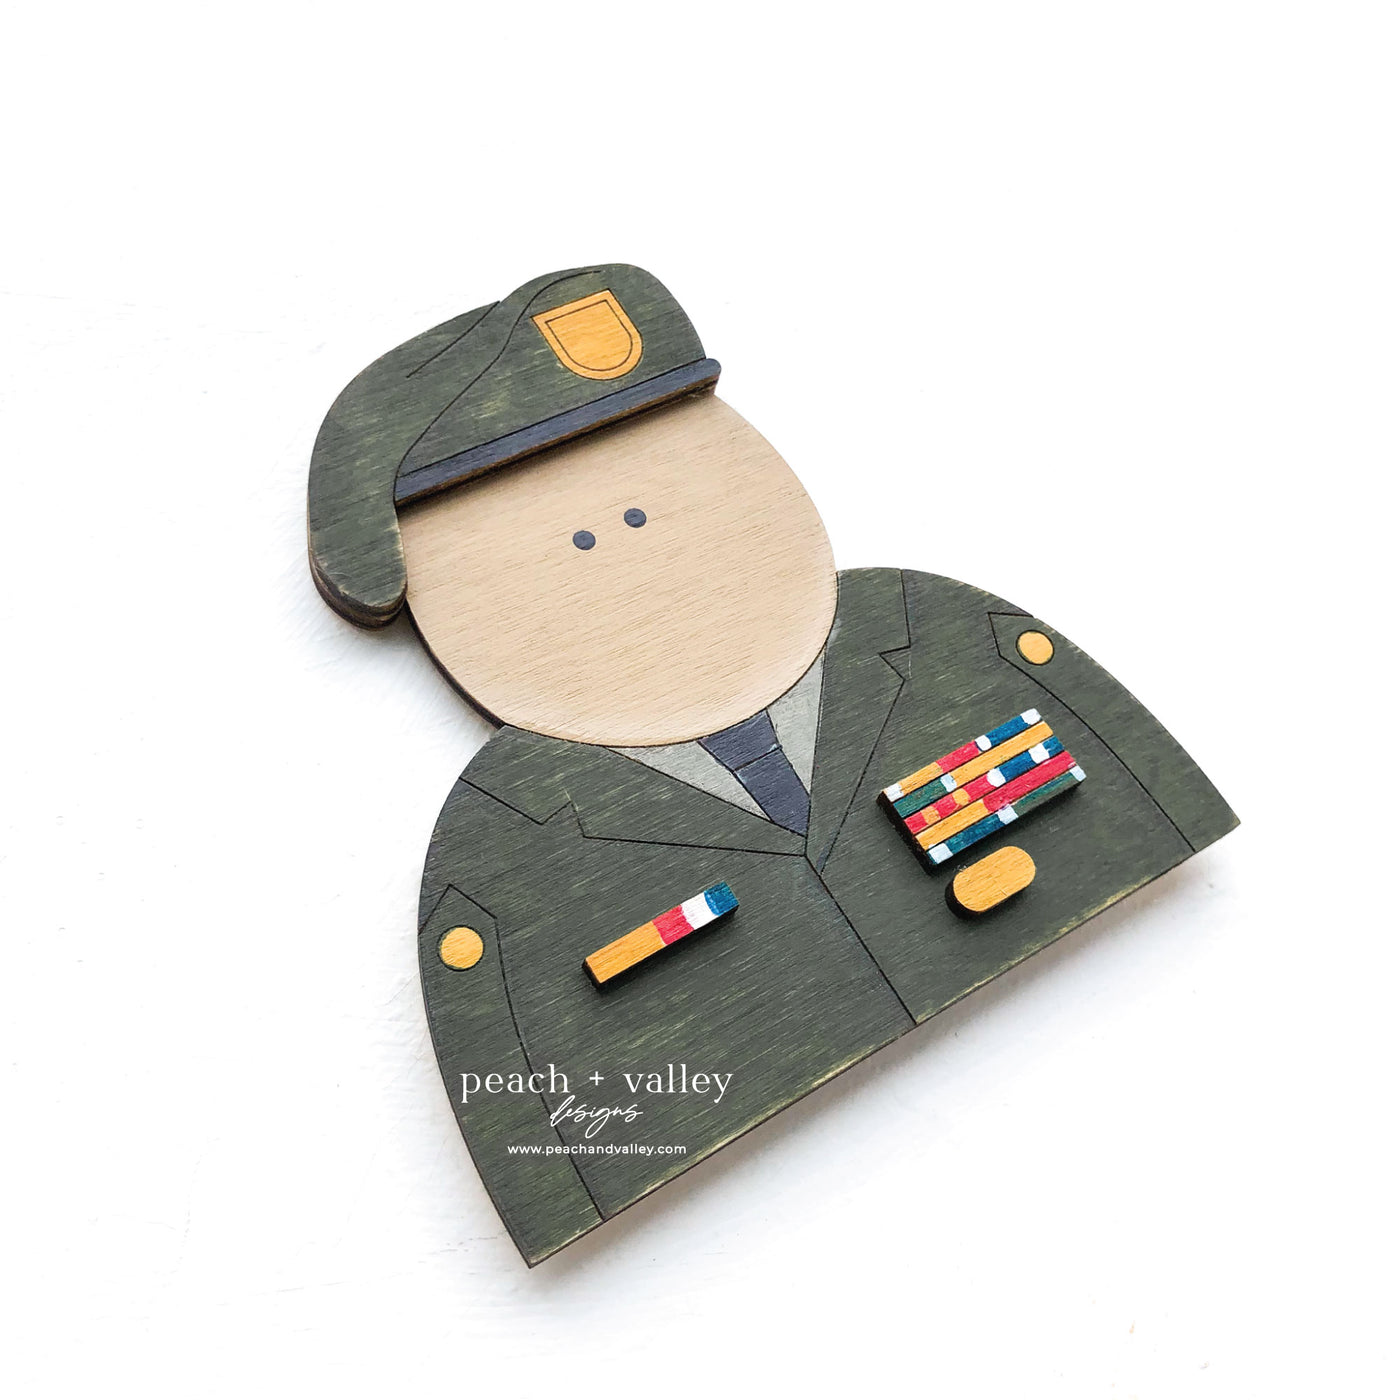 Beret Soldier Mini-Mee Blank